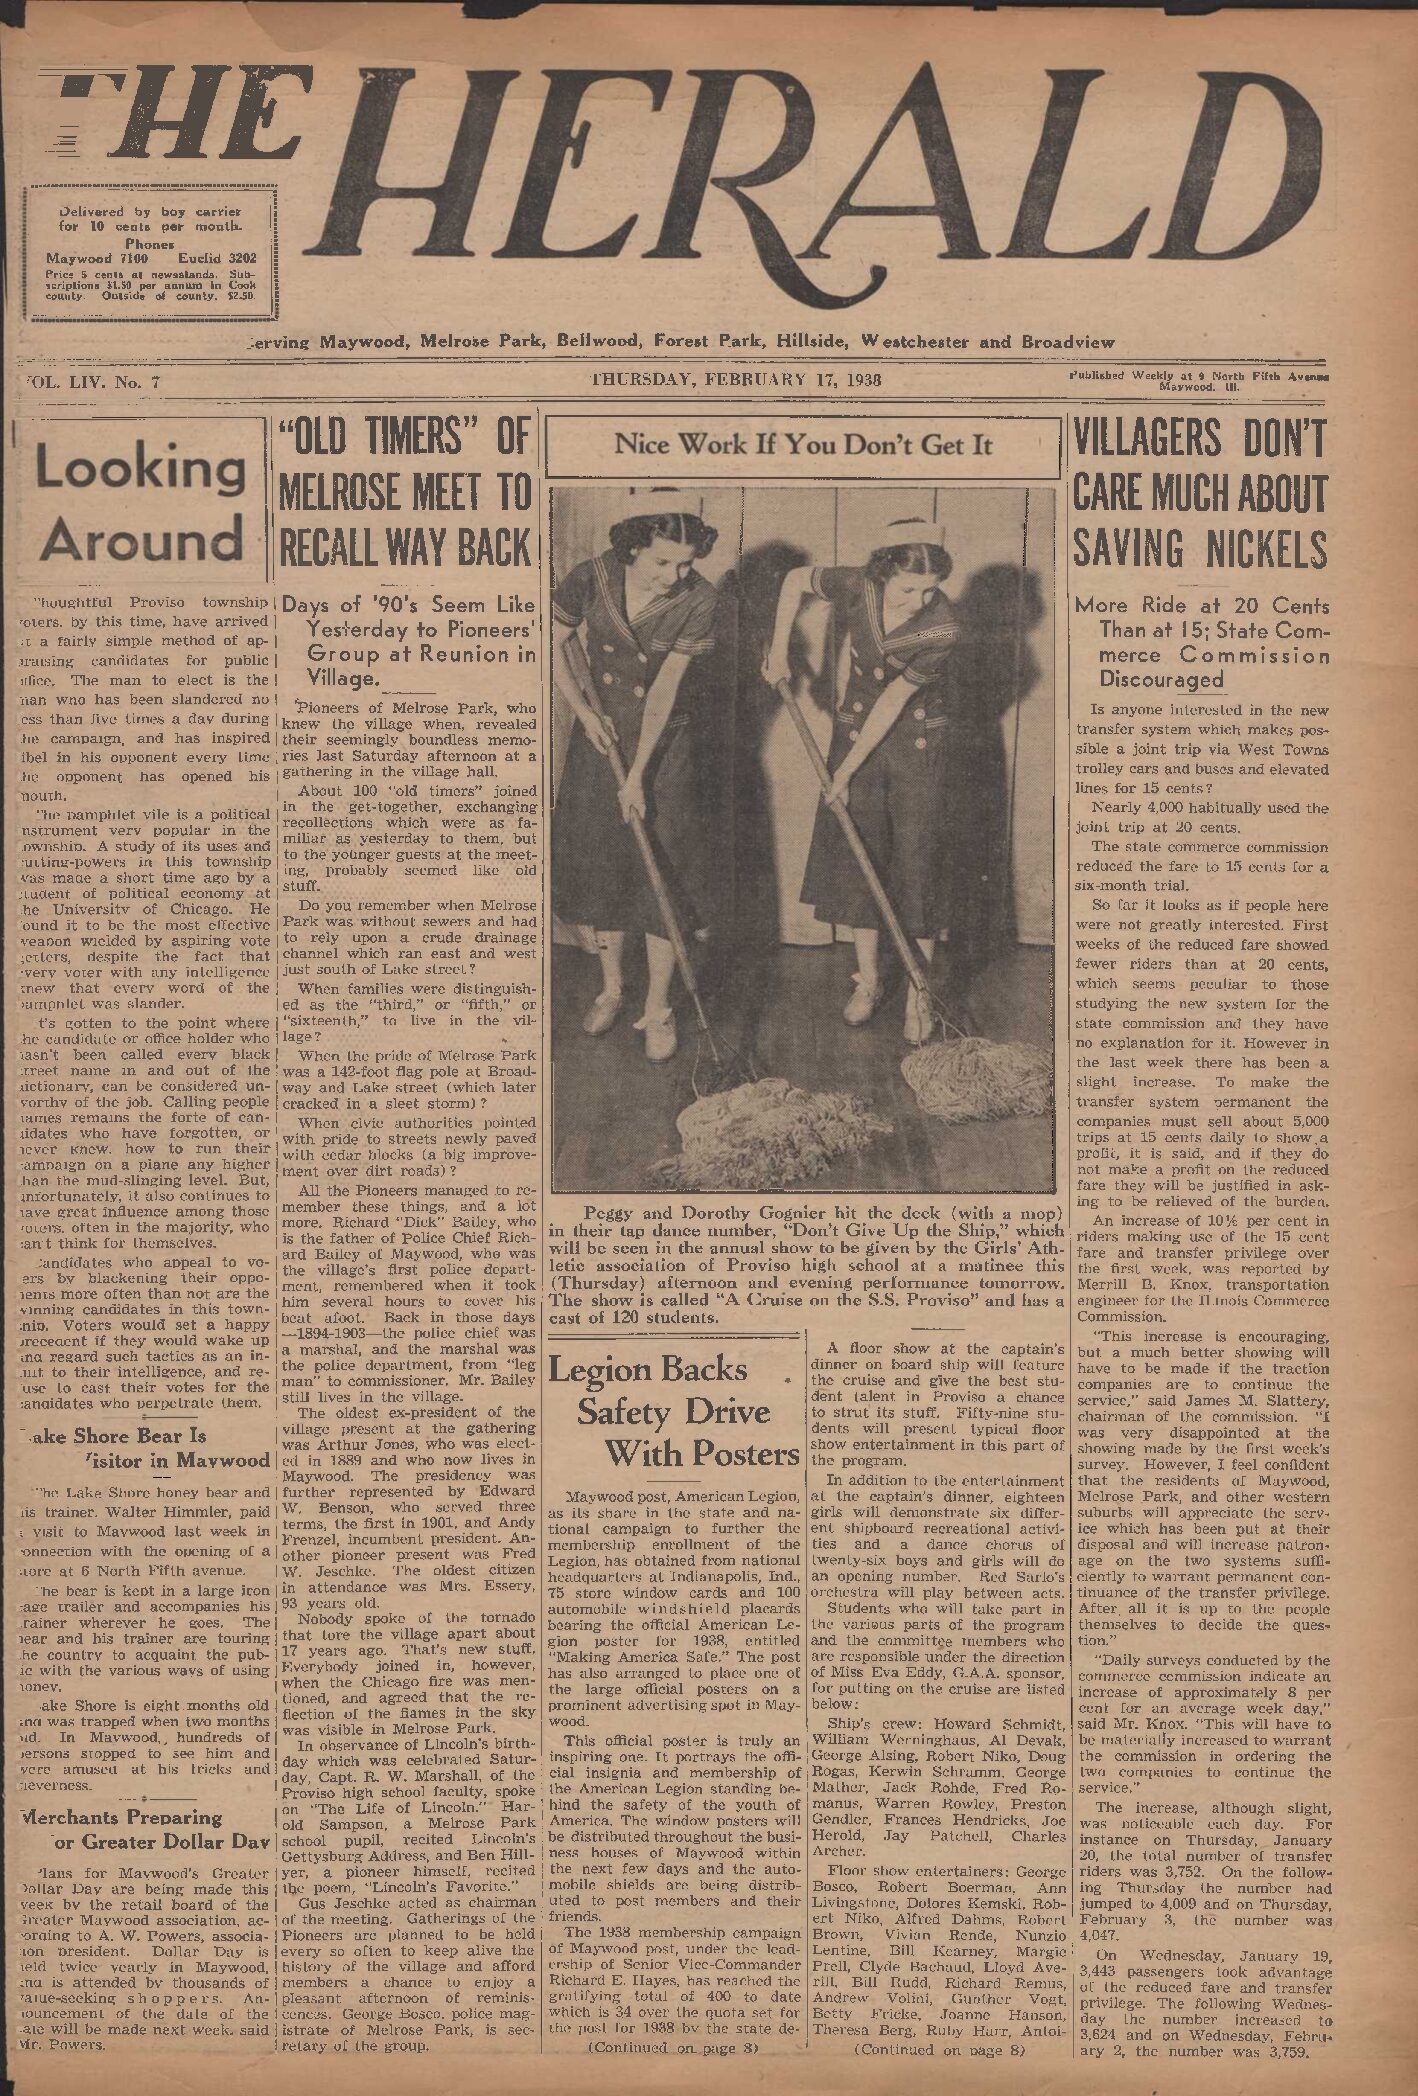 The Herald – 19380217